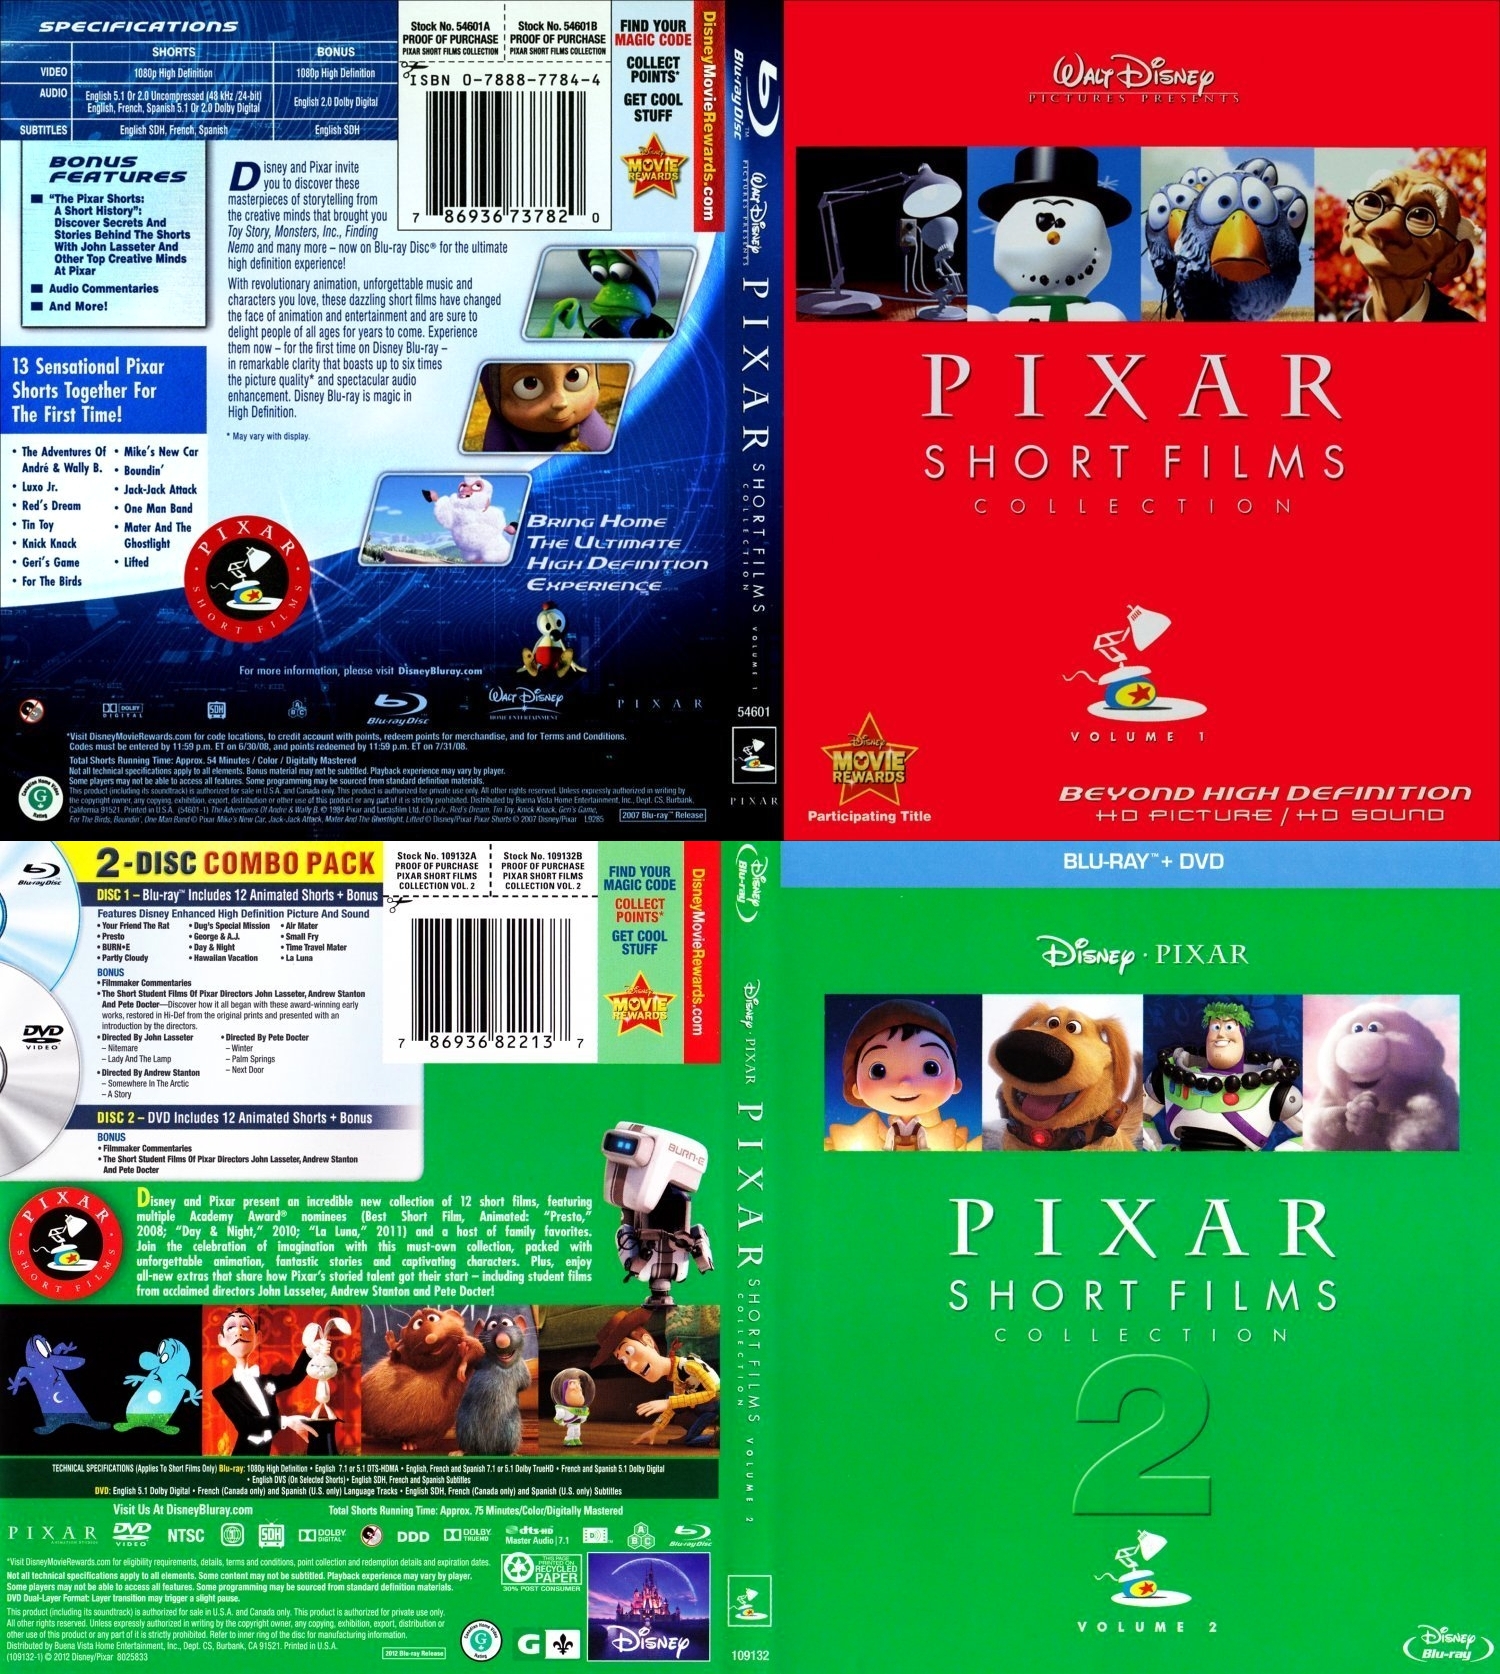 Stiahni si Filmy Kreslené Pixar pohadky Full Hd